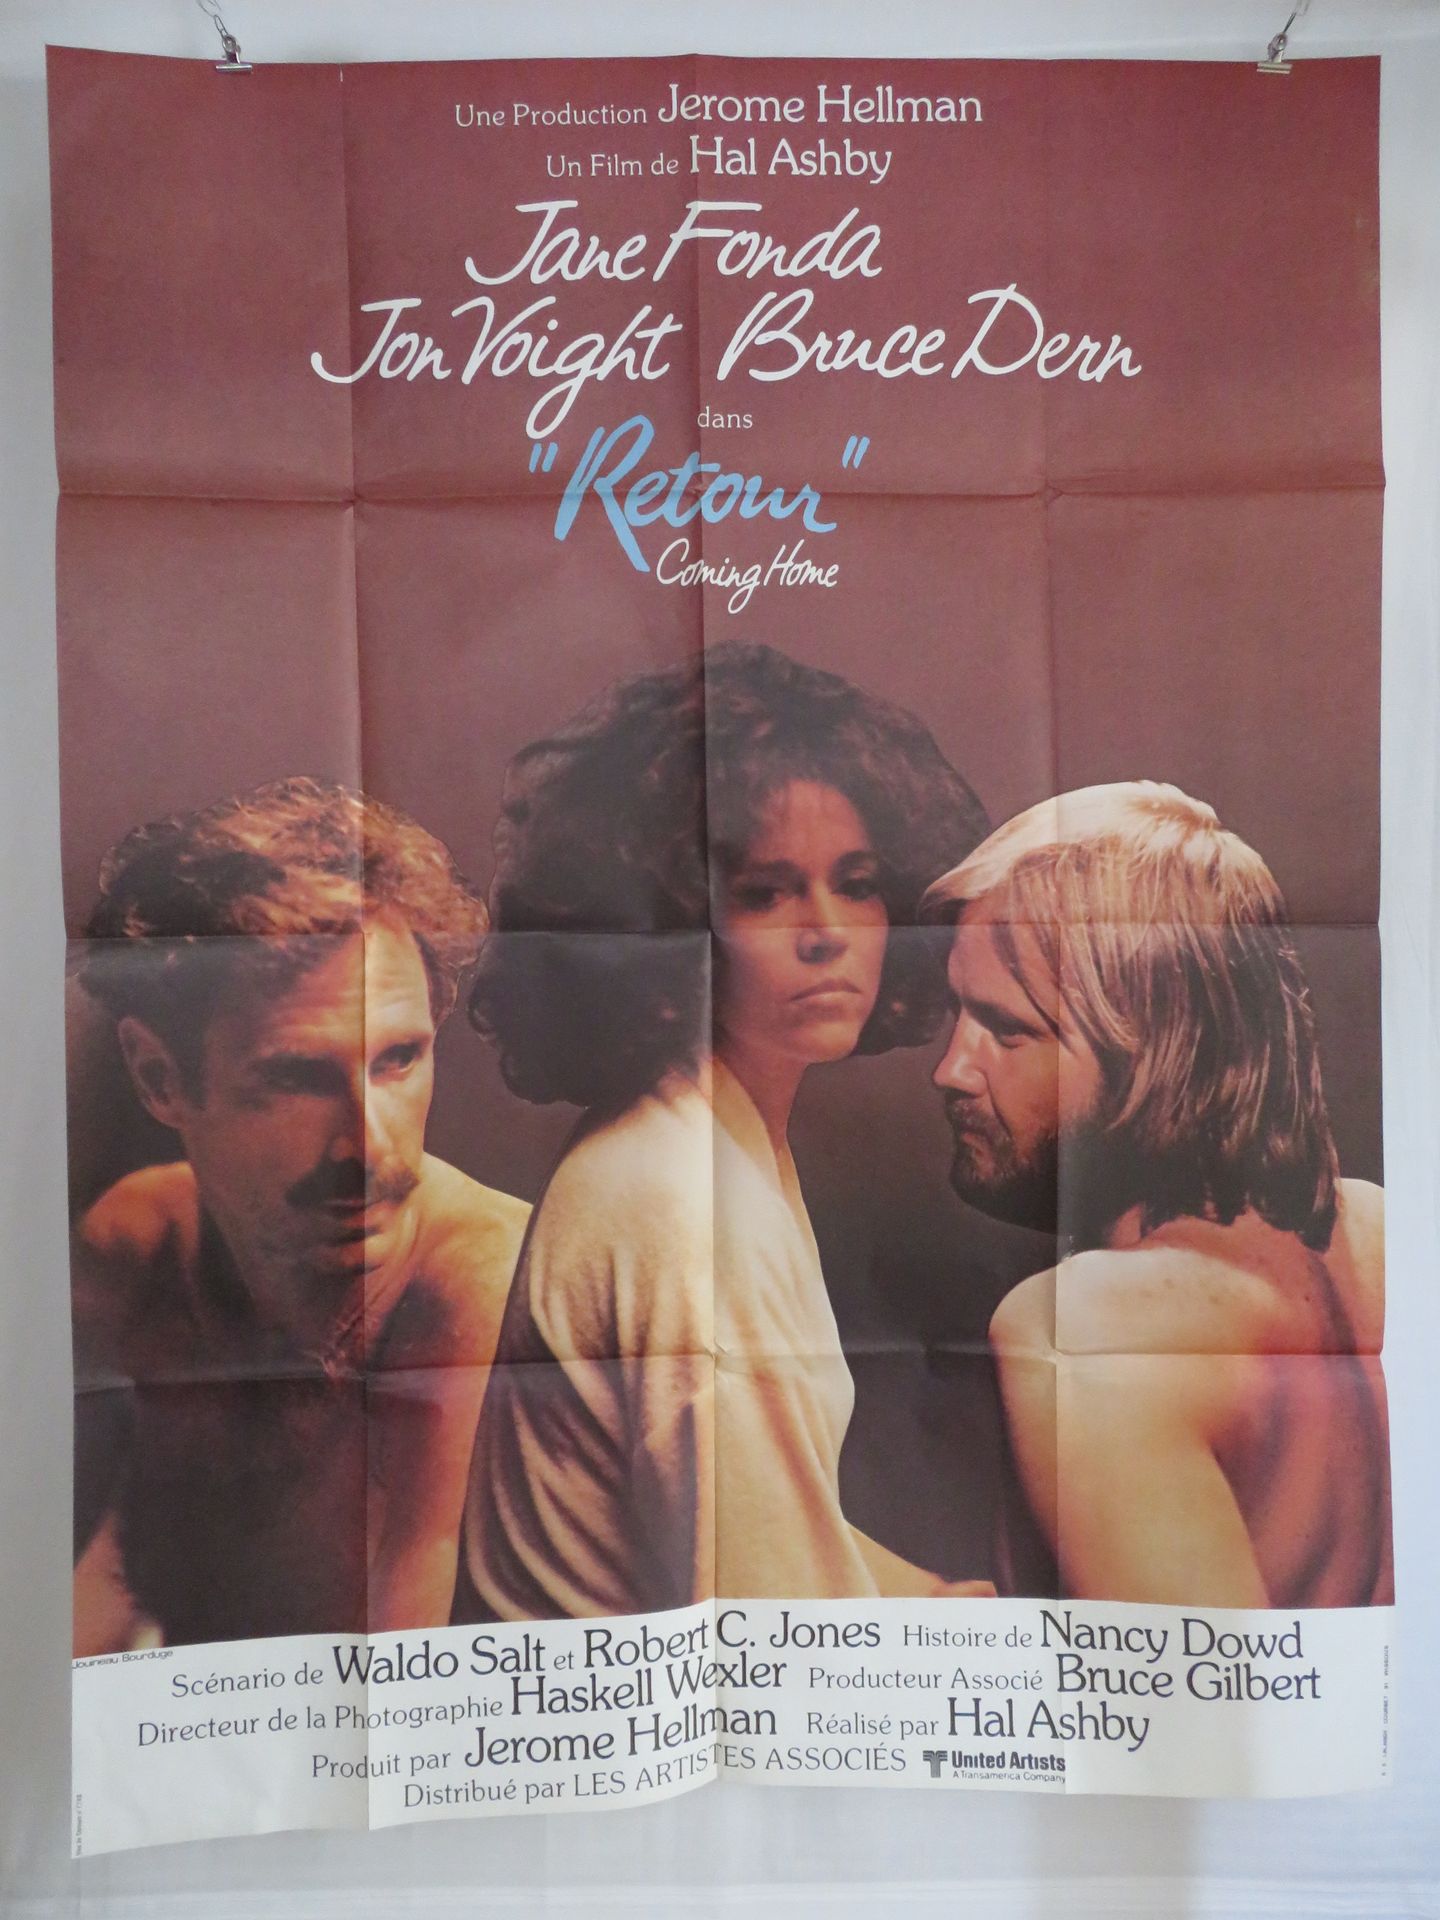 Null "RETURN" (1978) by Hal ASHBY with Jane Fonda, Jon Voight, Bruce Dern, Rober&hellip;